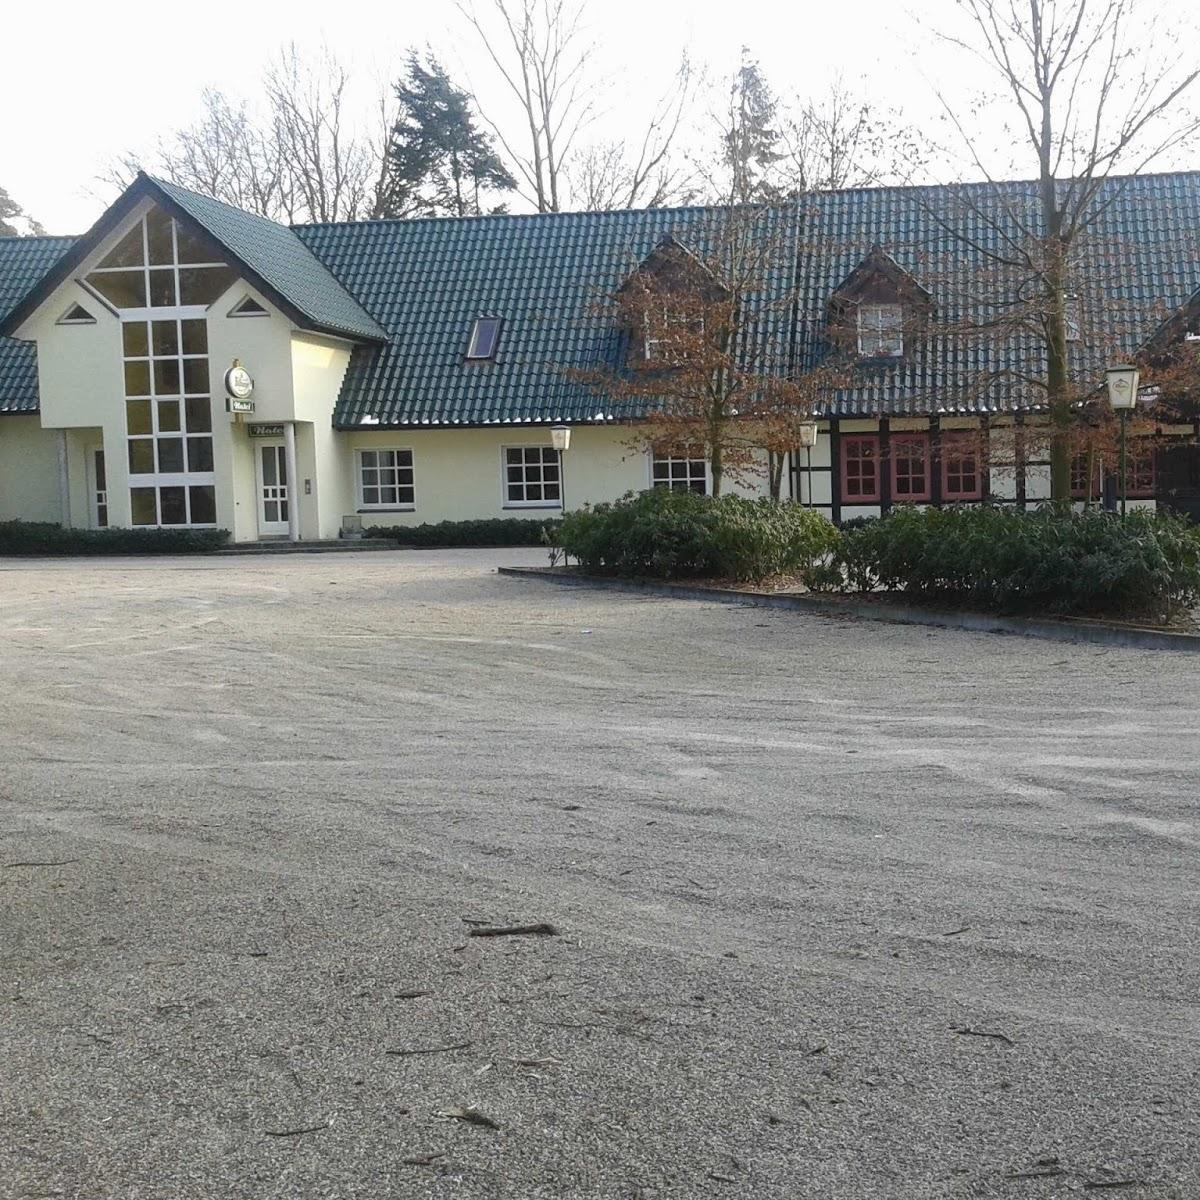 Restaurant "Waldhotel Schipp-Hummert" in Emsdetten